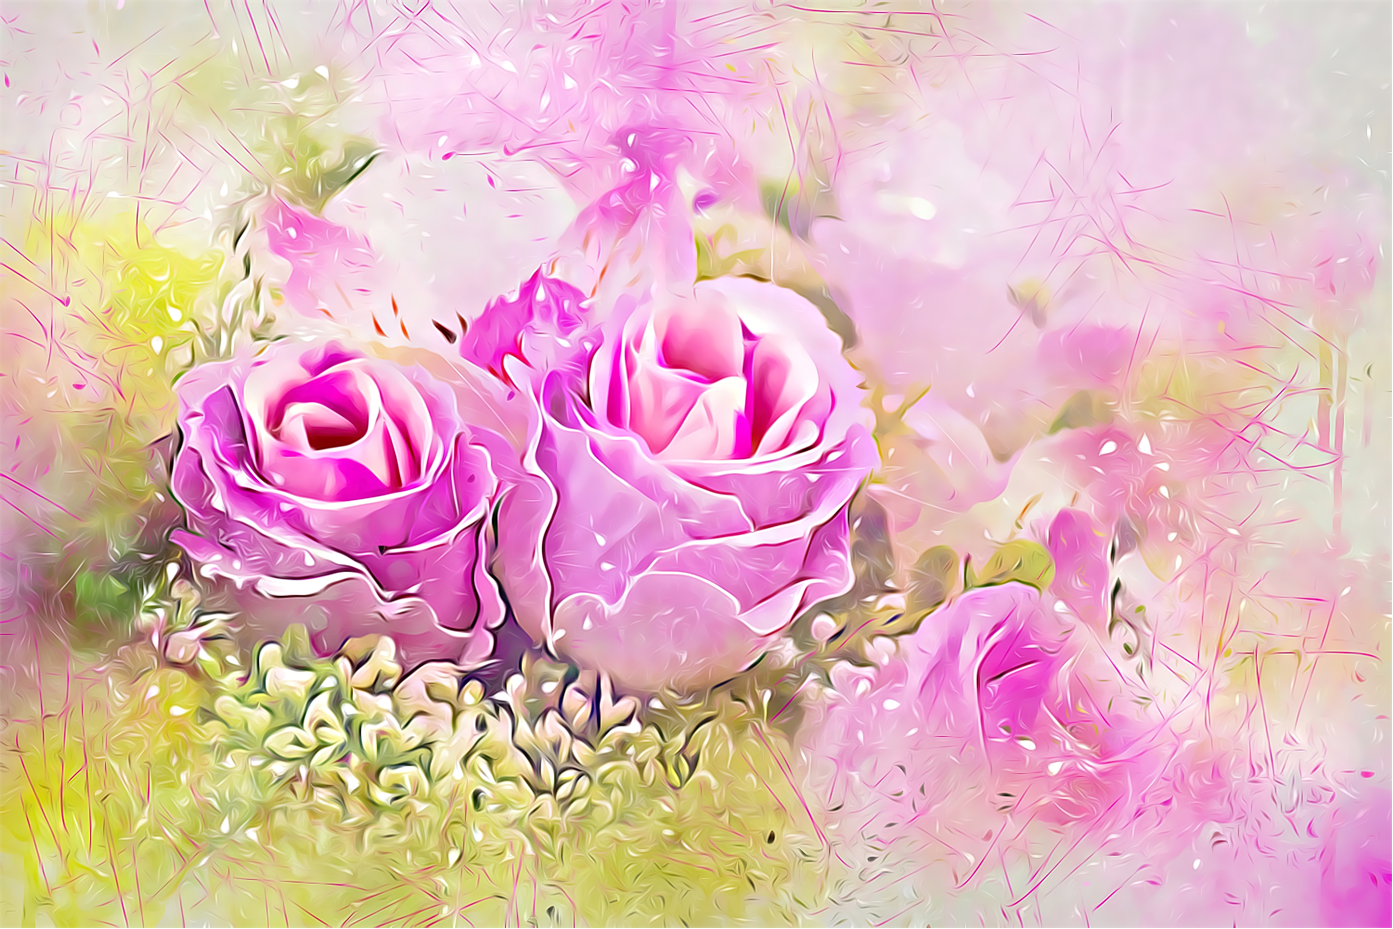 Misty Rose Bouquet - Art by Denise Dundon